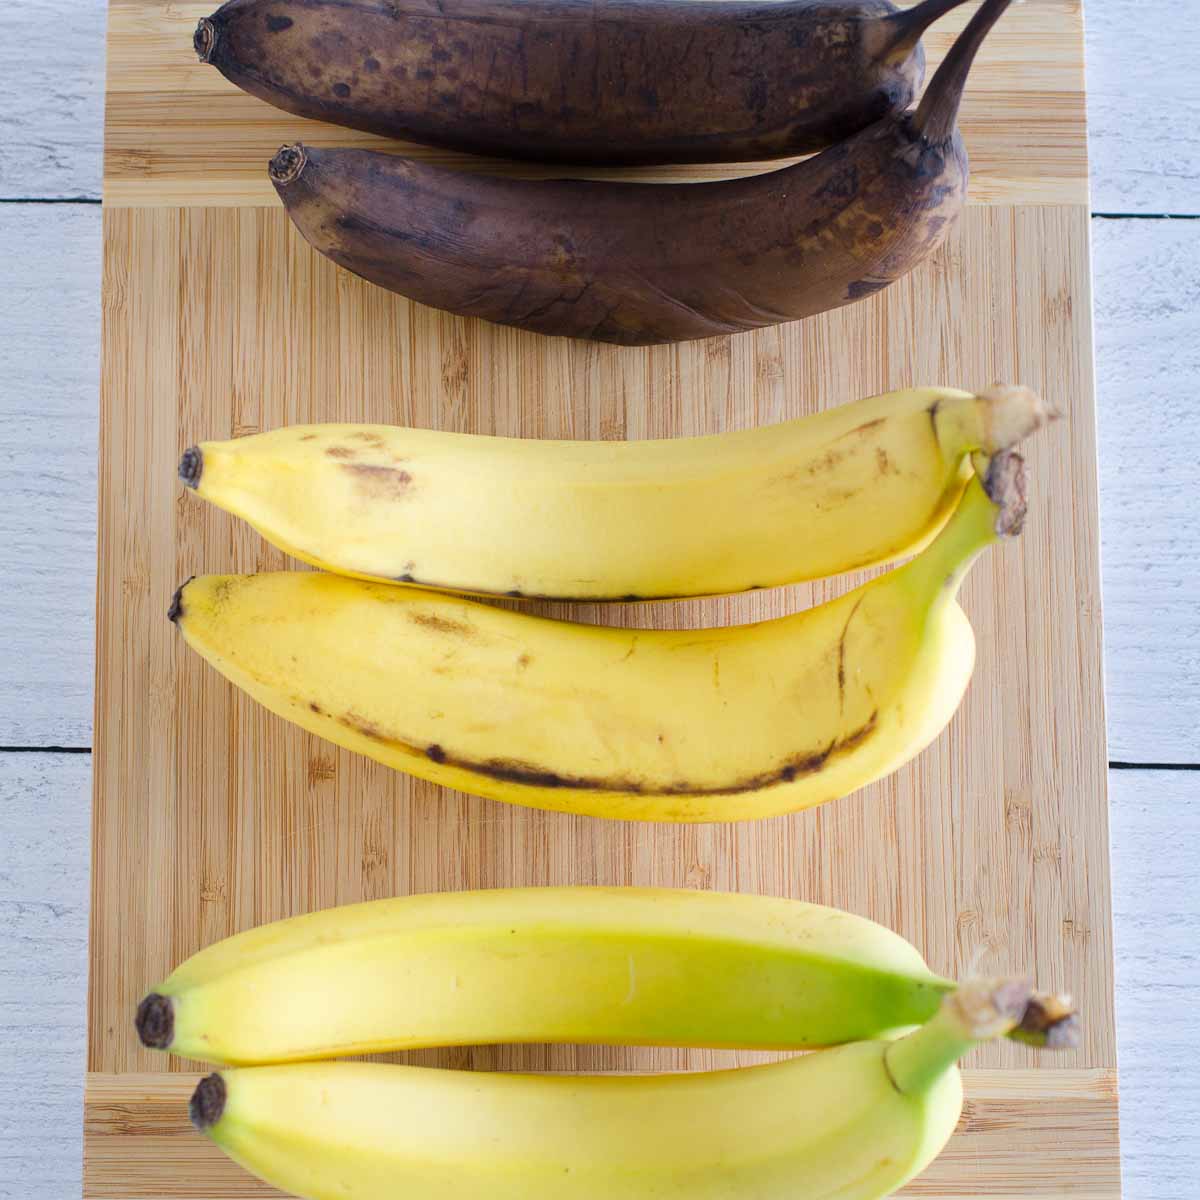 How to Ripen Bananas